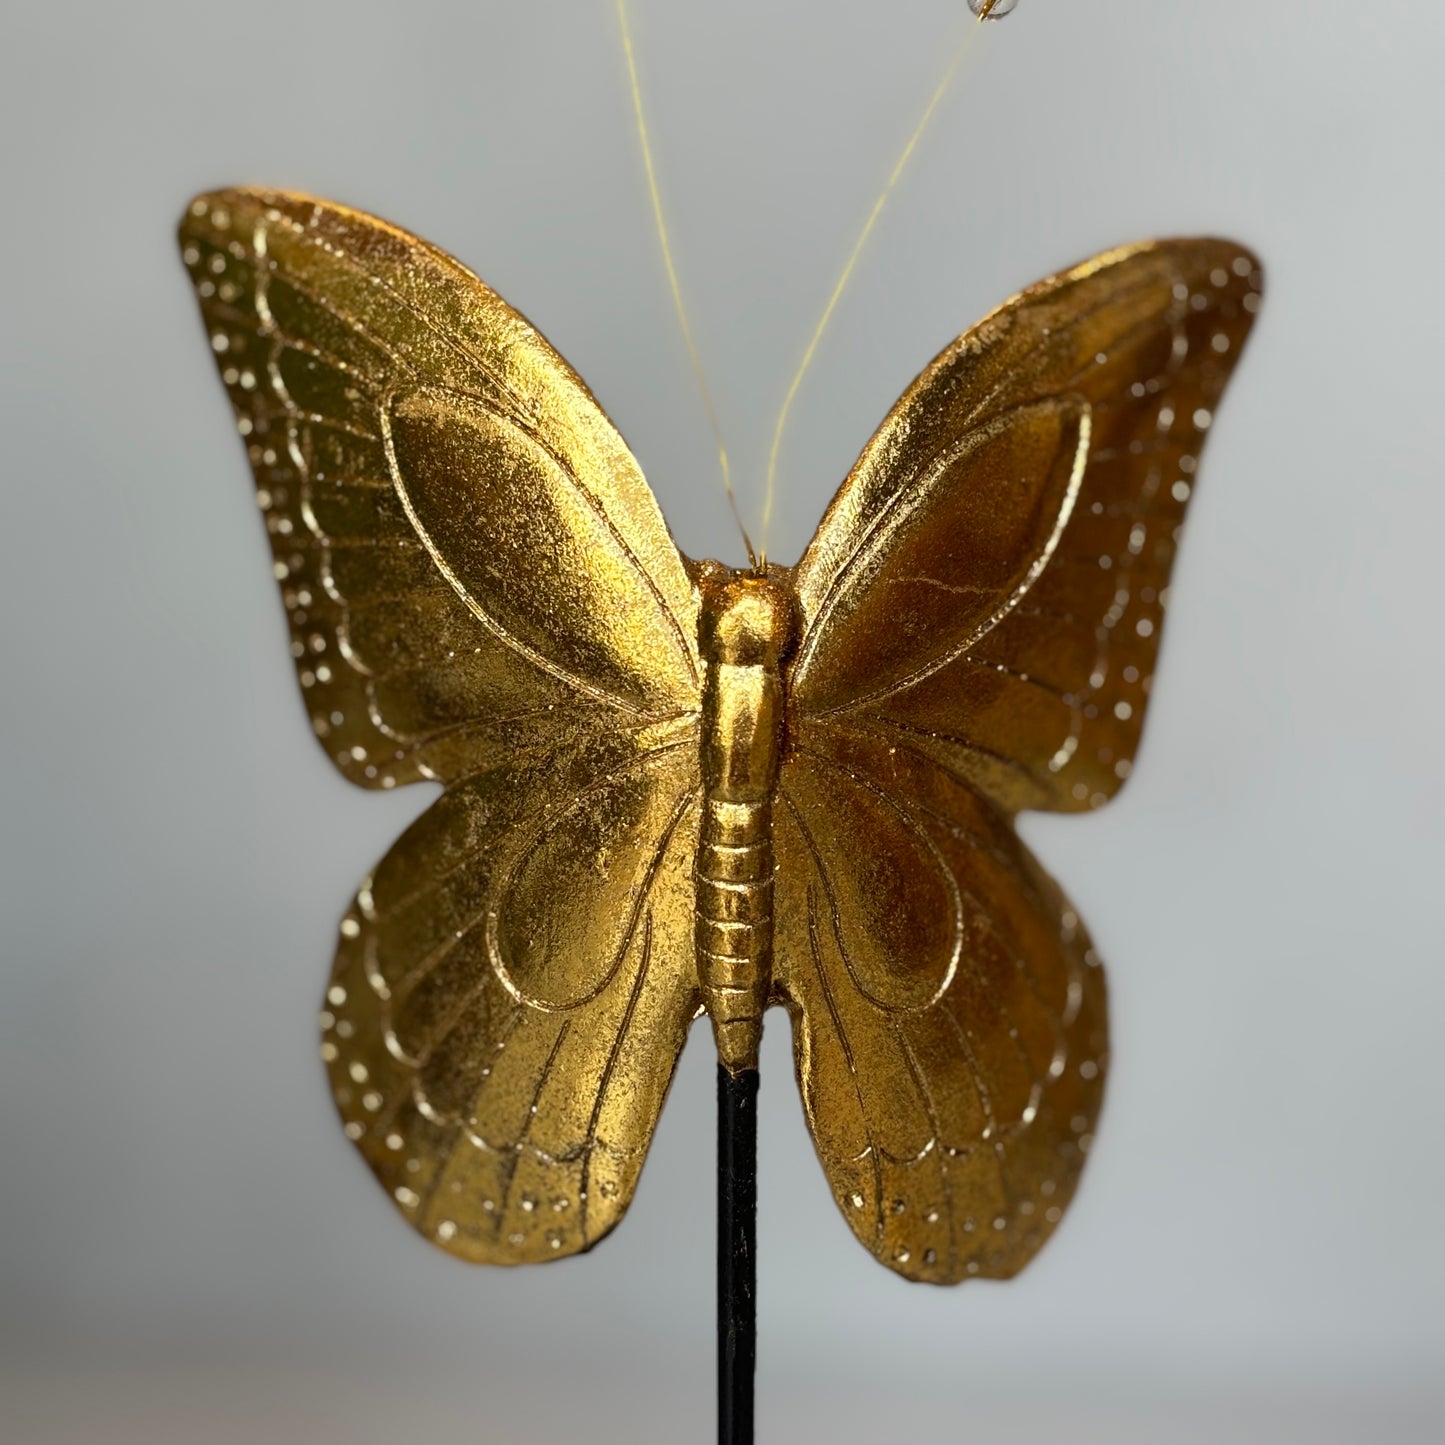 Butterfly Decorative Sculpture